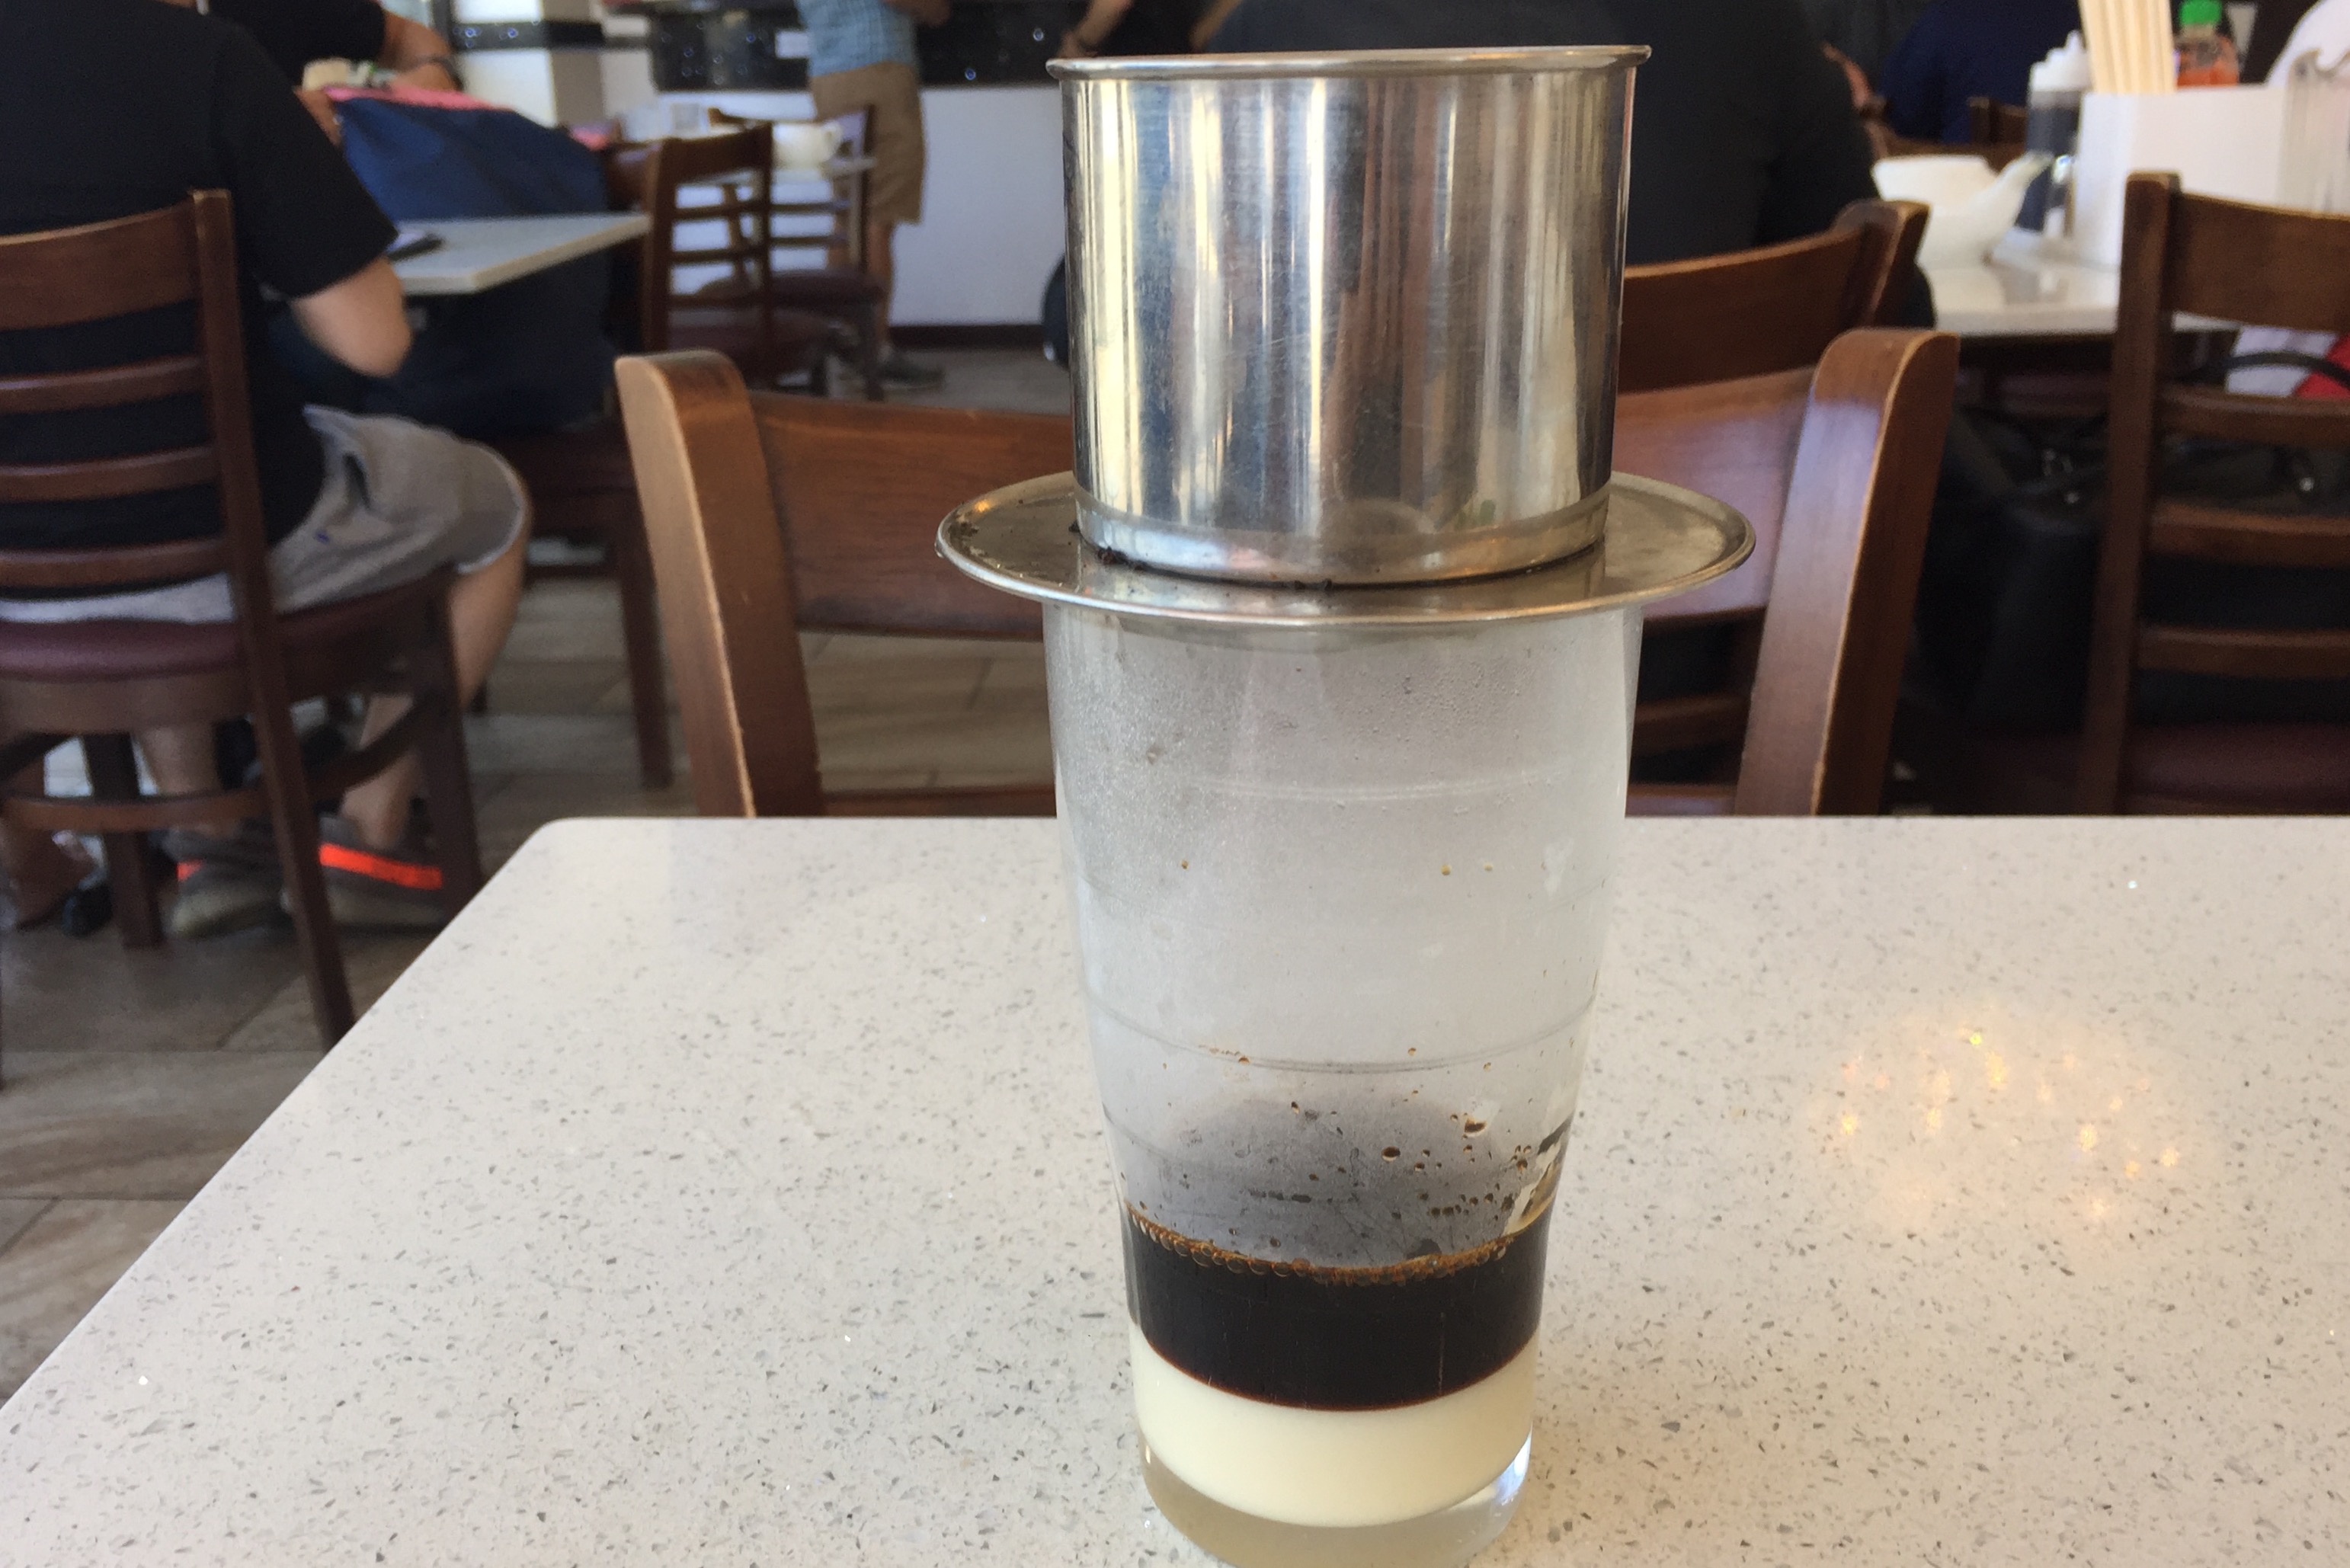 Vietnamese Ice Coffee